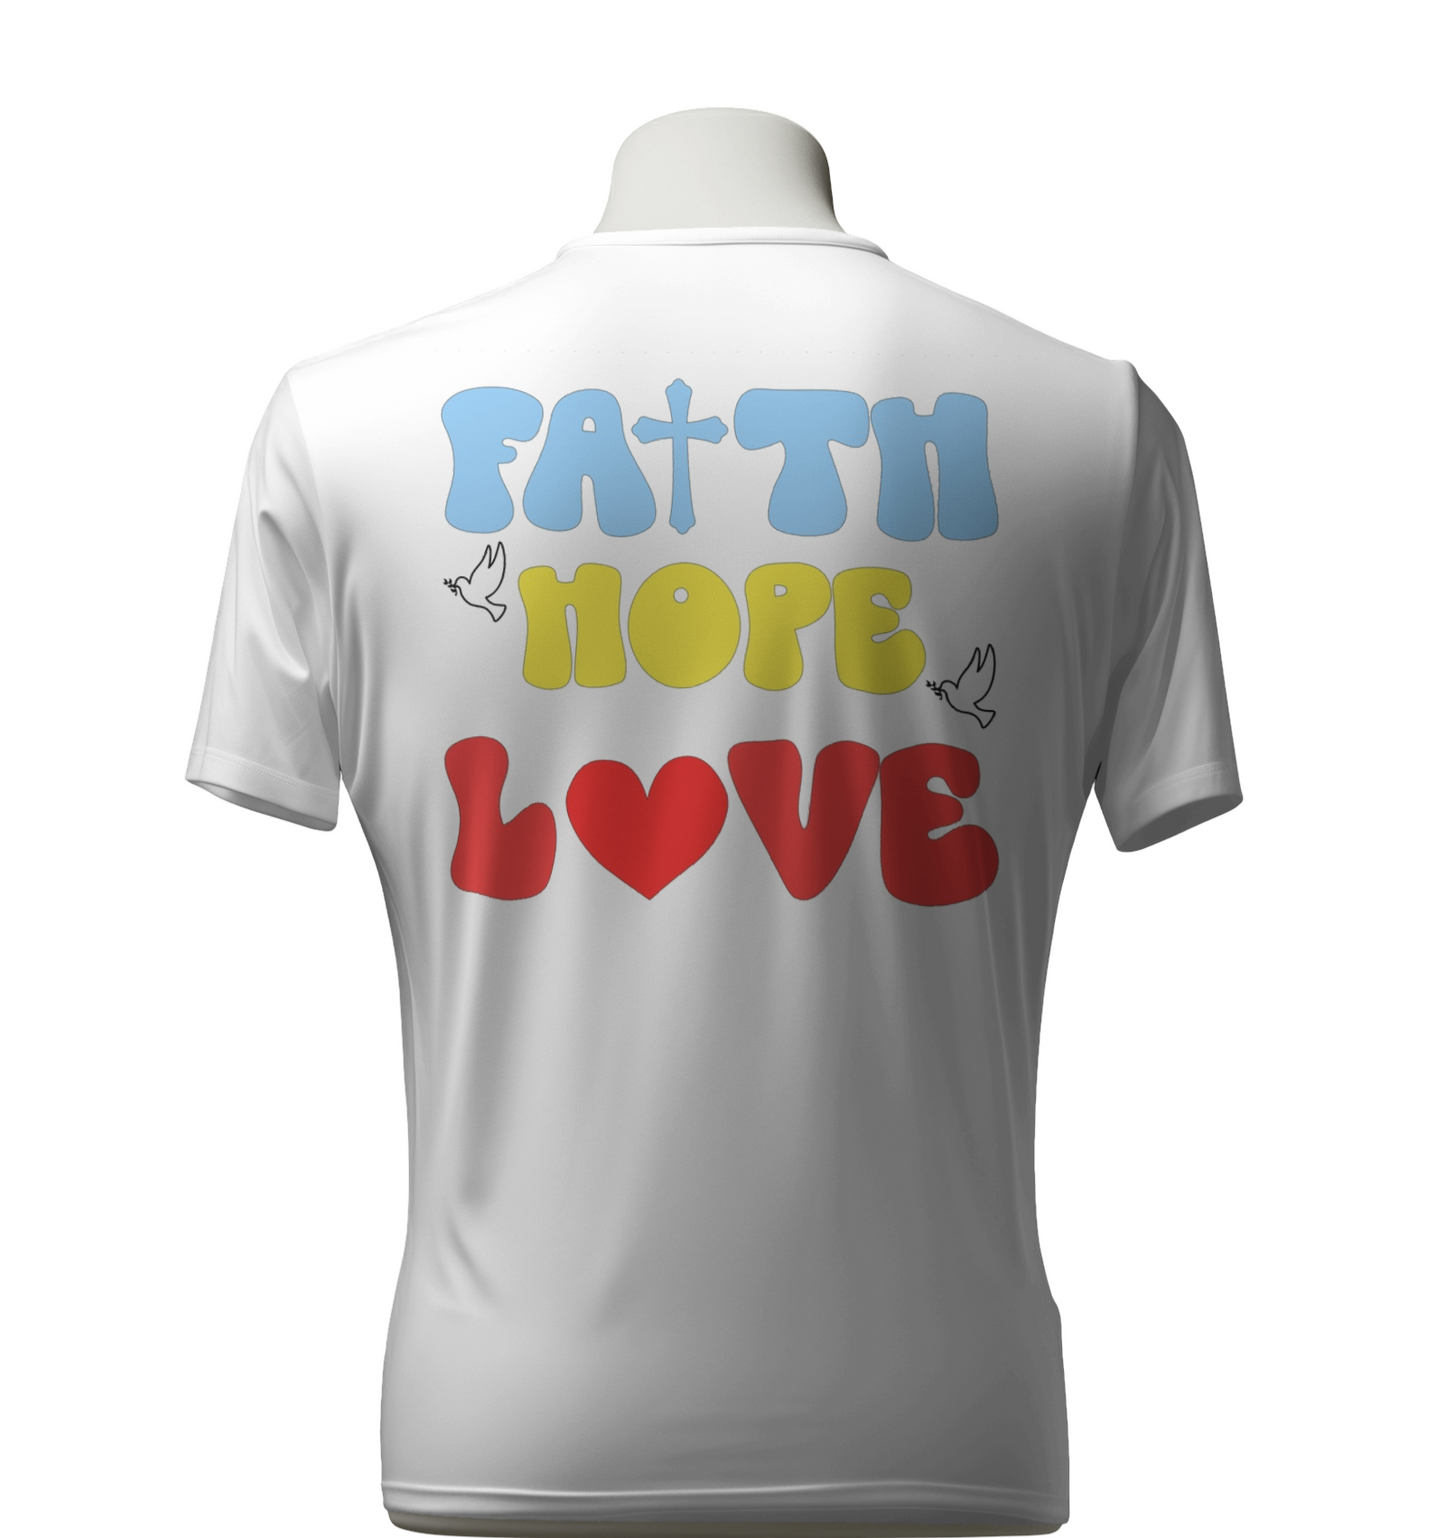 Faith Hope Love T-Shirt